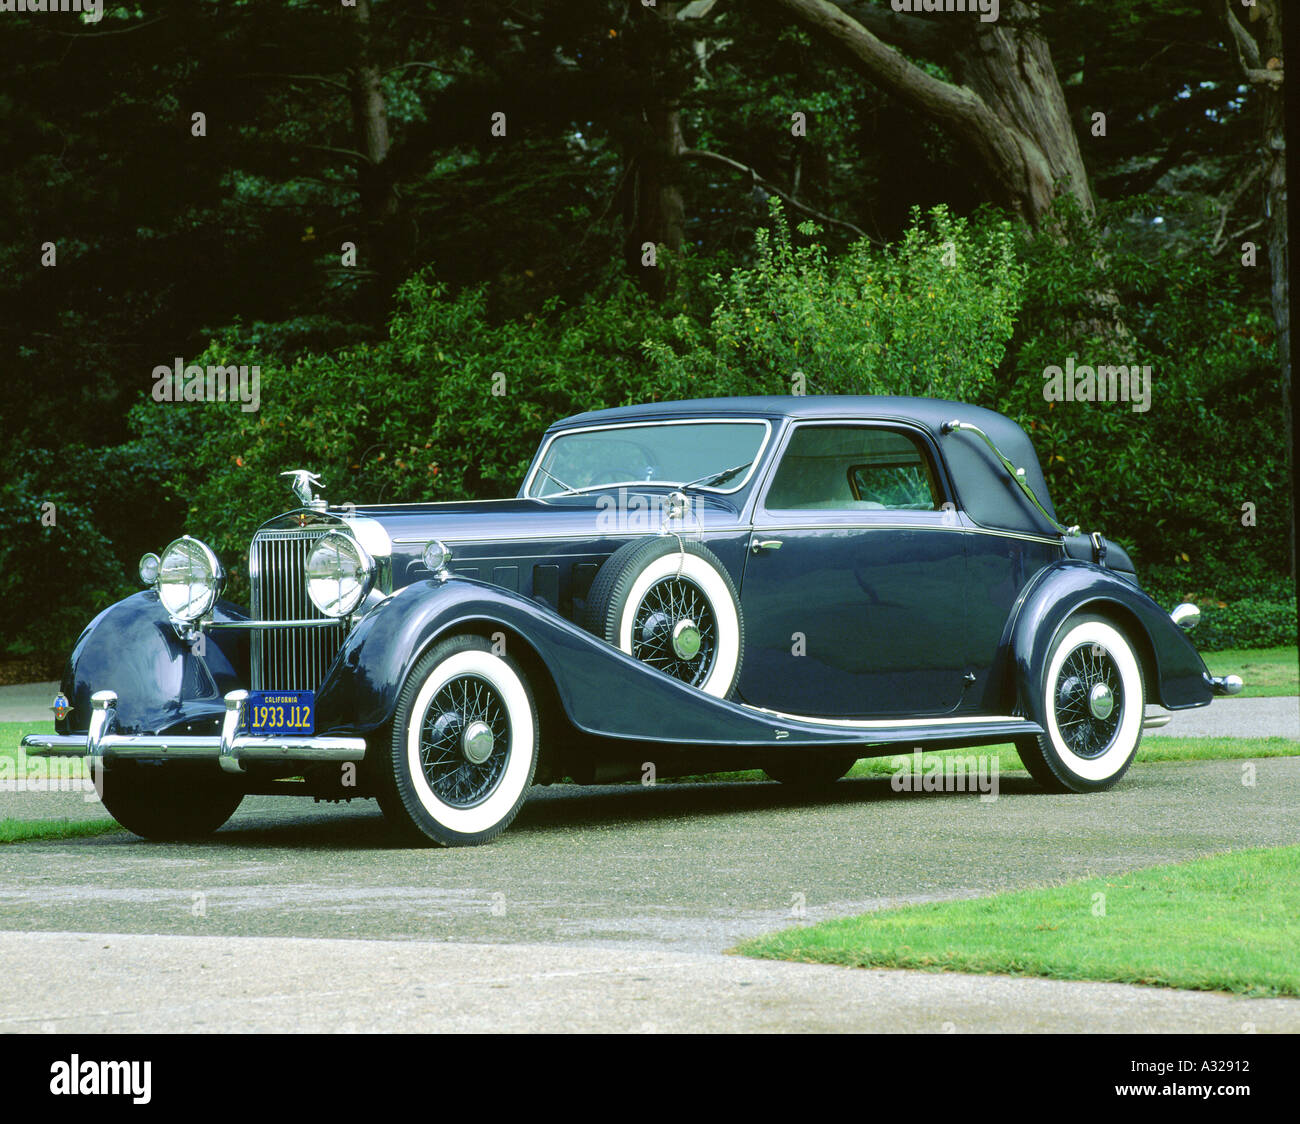 1933 Hispano Suiza J12 Foto Stock